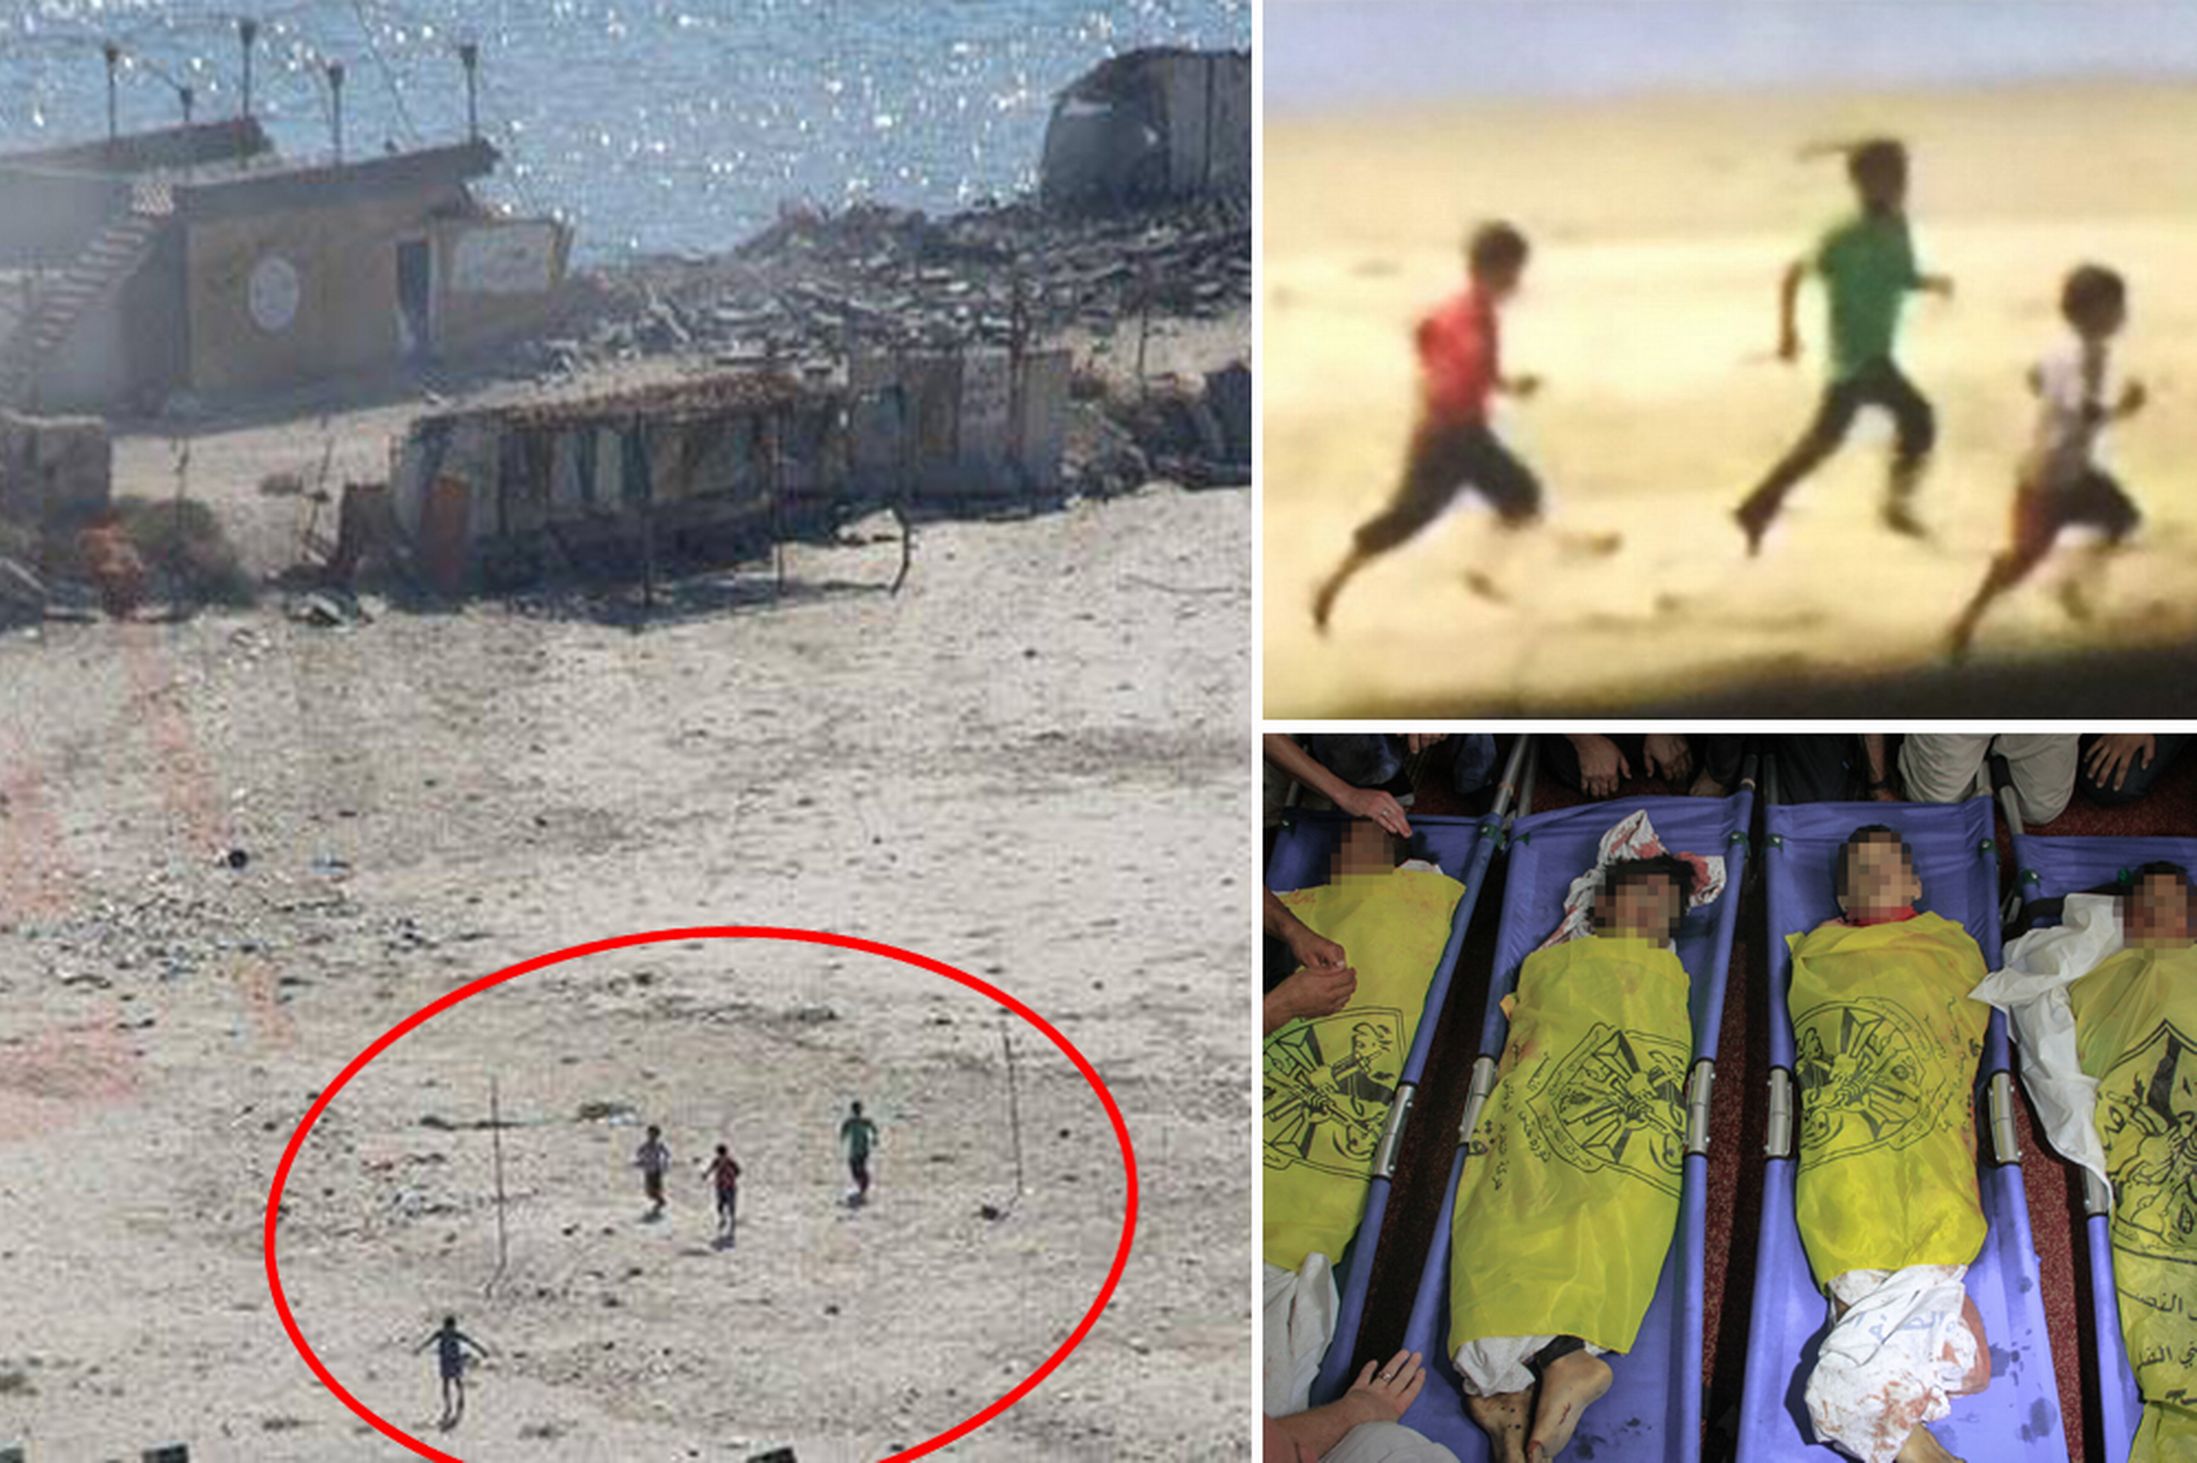 http://www.slate.com/blogs/the_slatest/2014/07/16/gaza_beach_deaths_children_killed_apparently_by_air_strike.html